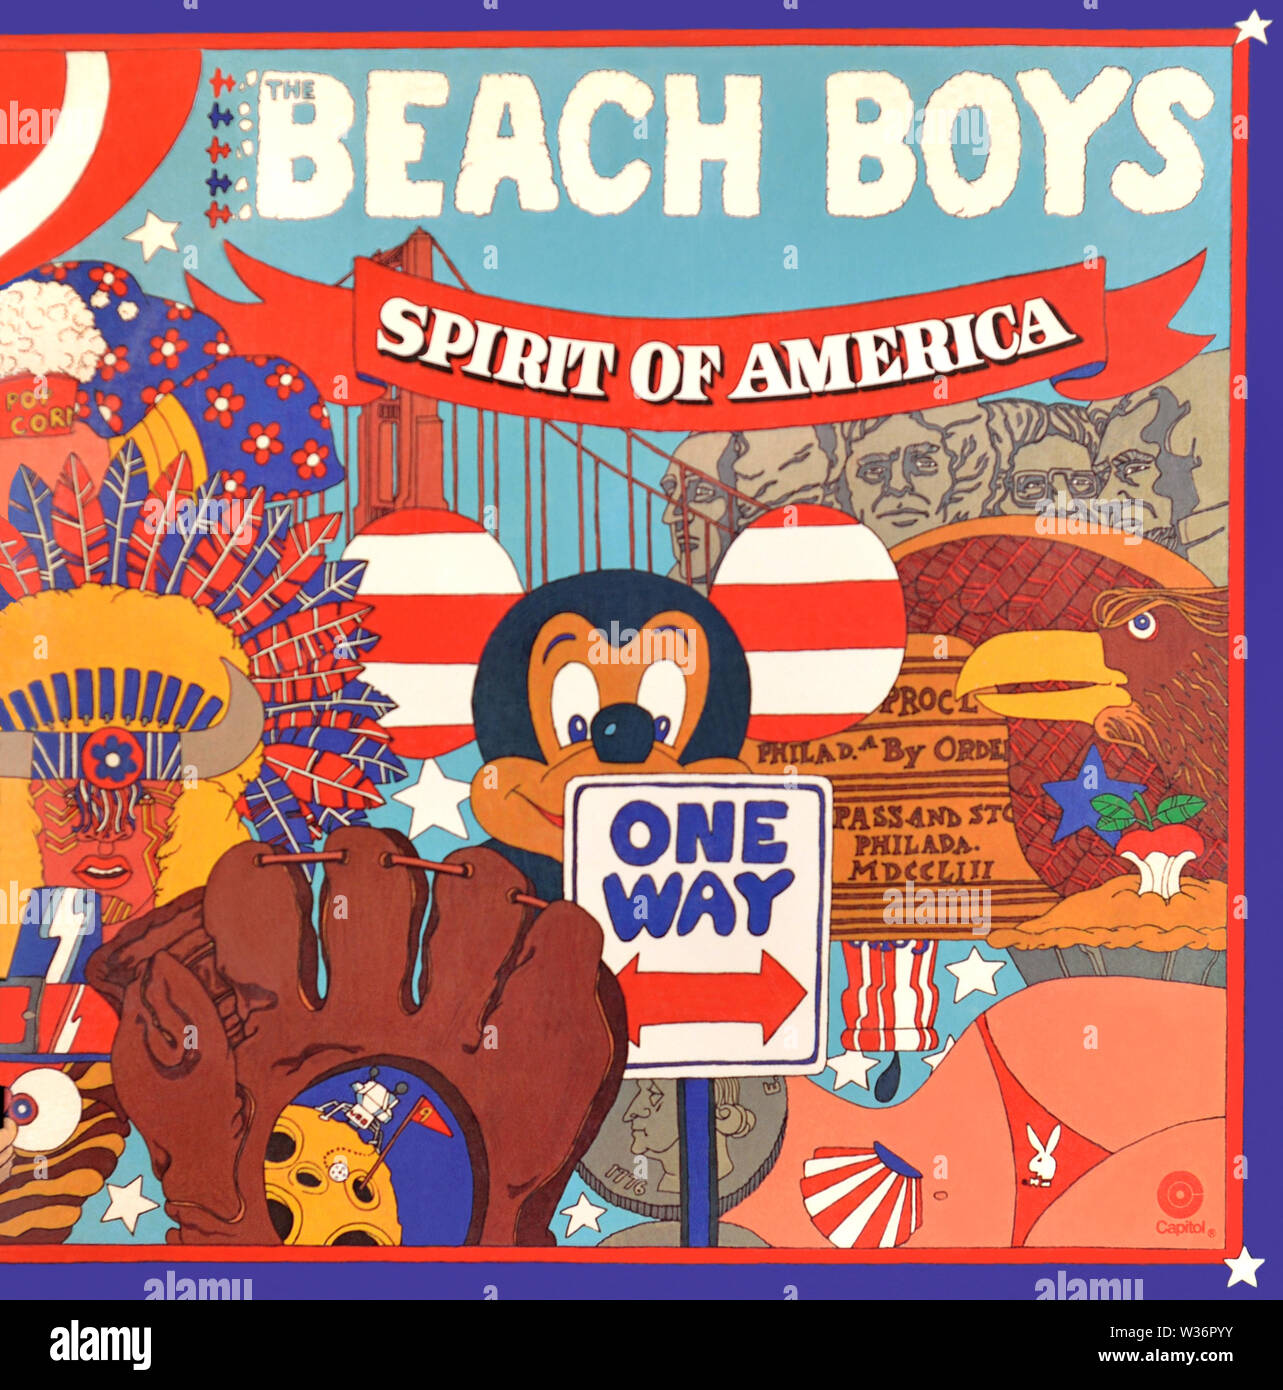 The Beach Boys - original vinyl album cover - Spirit Of America - 1975 Stock Photo